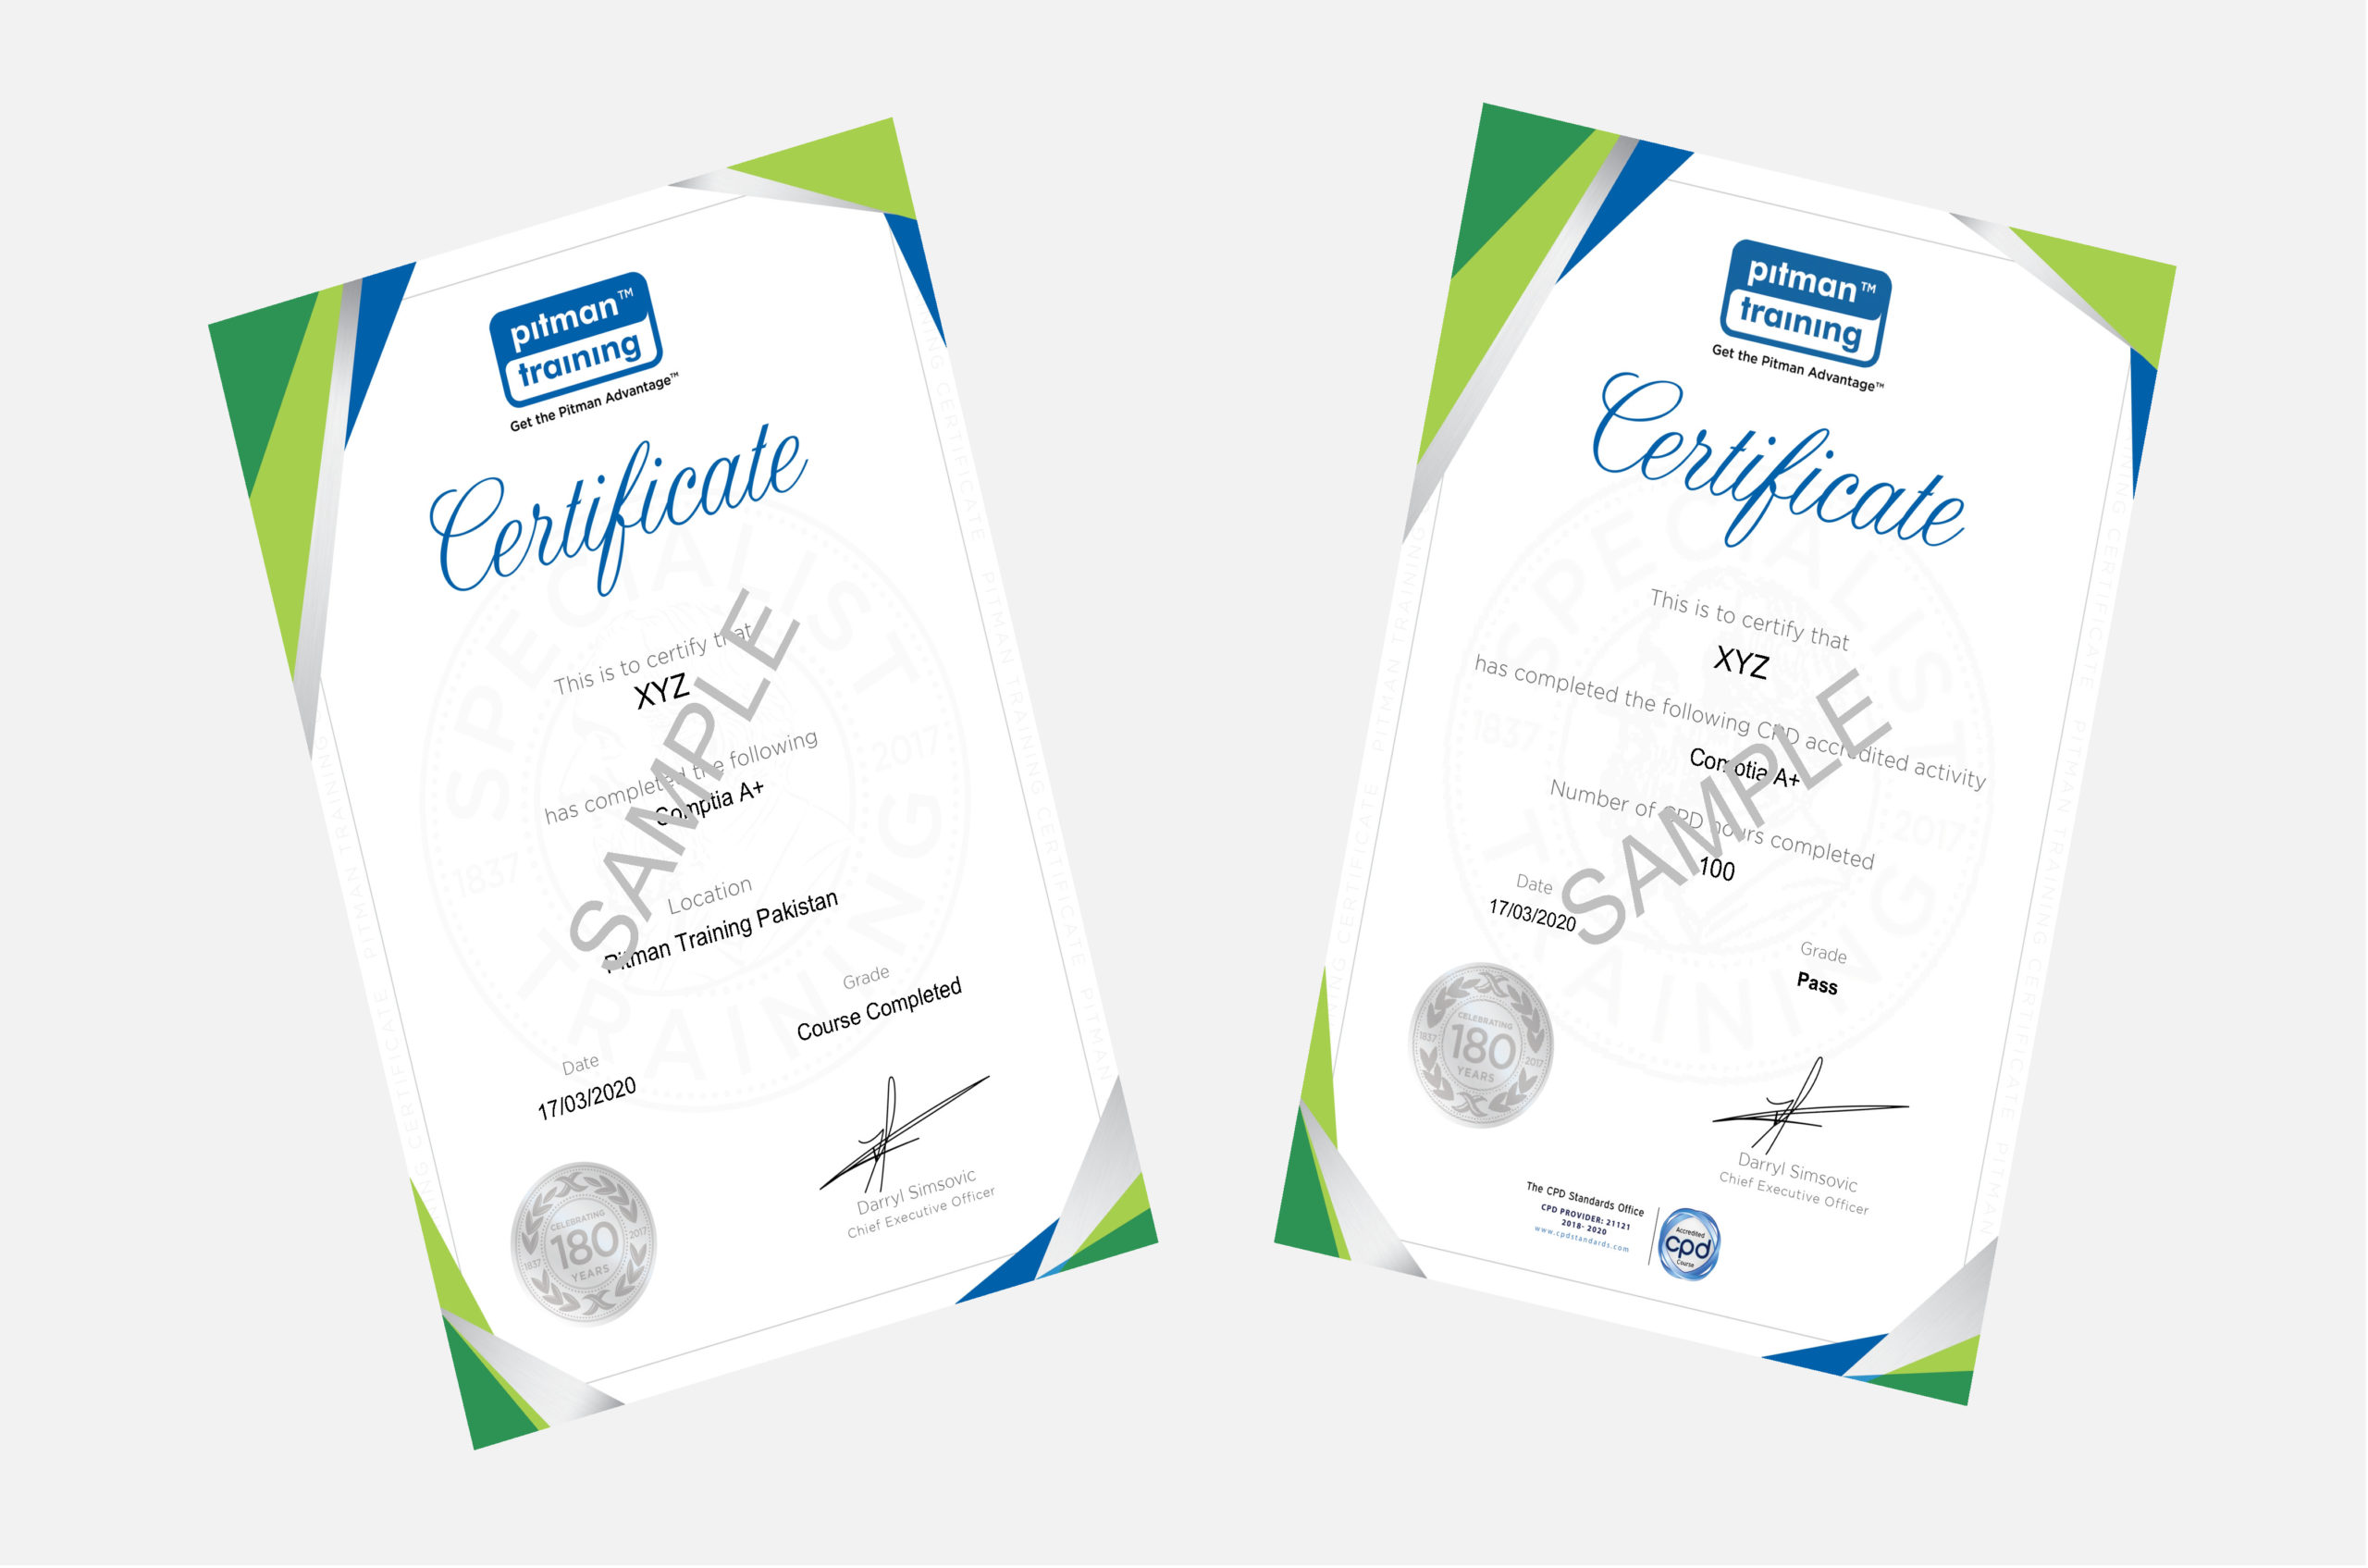 Comptia Certificate A Website scaled